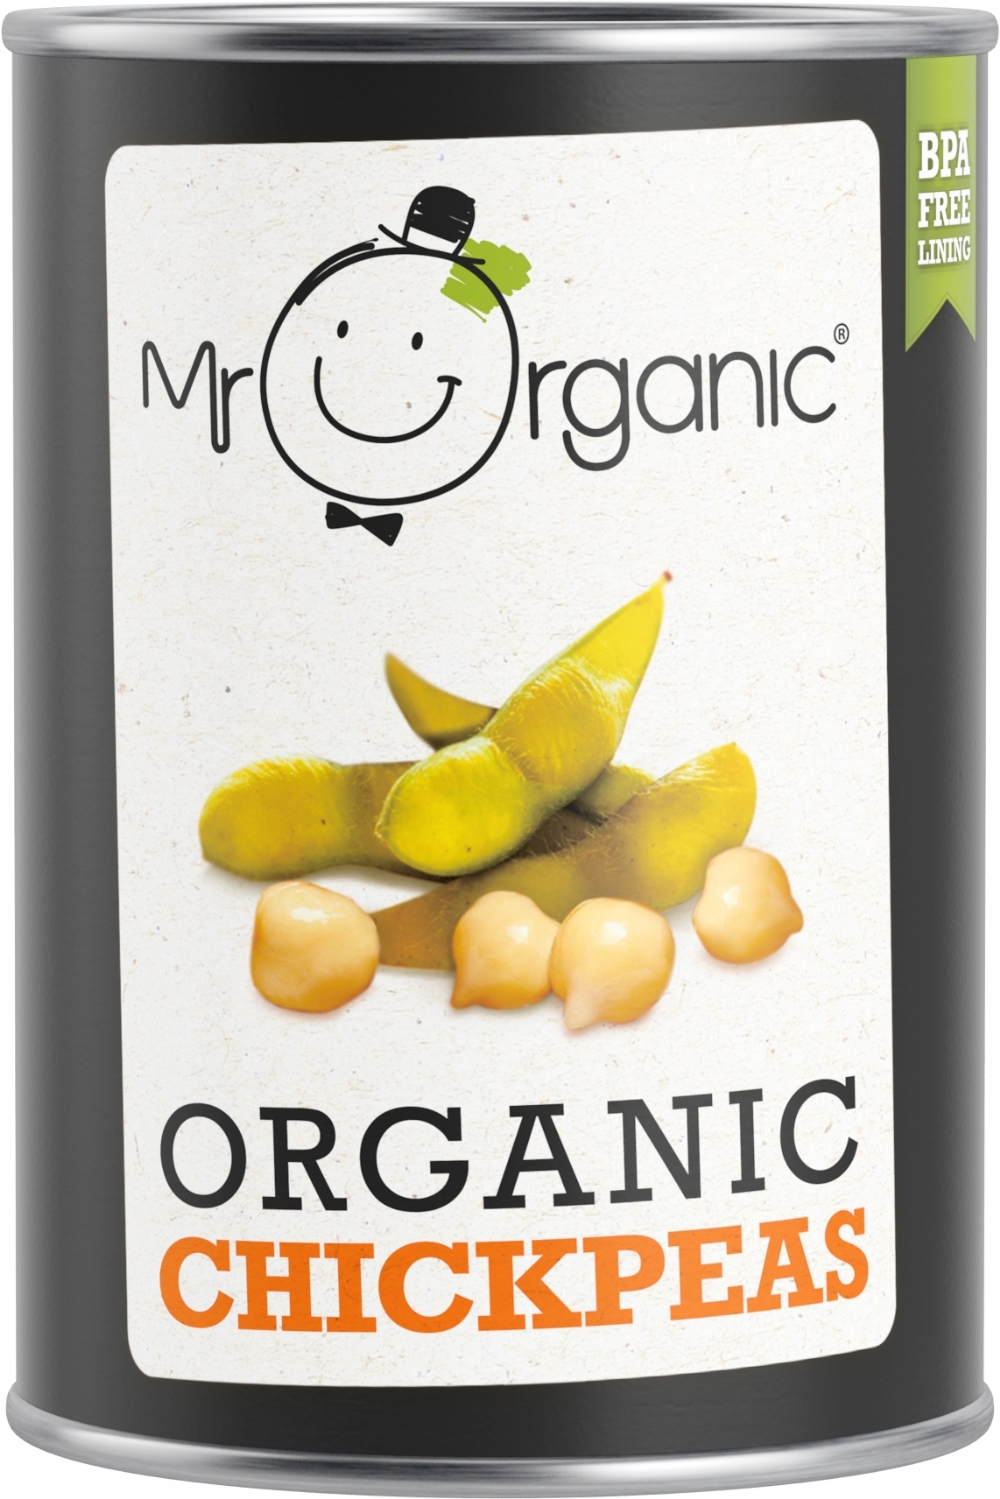 MR ORGANIC Organic Chickpeas 400g